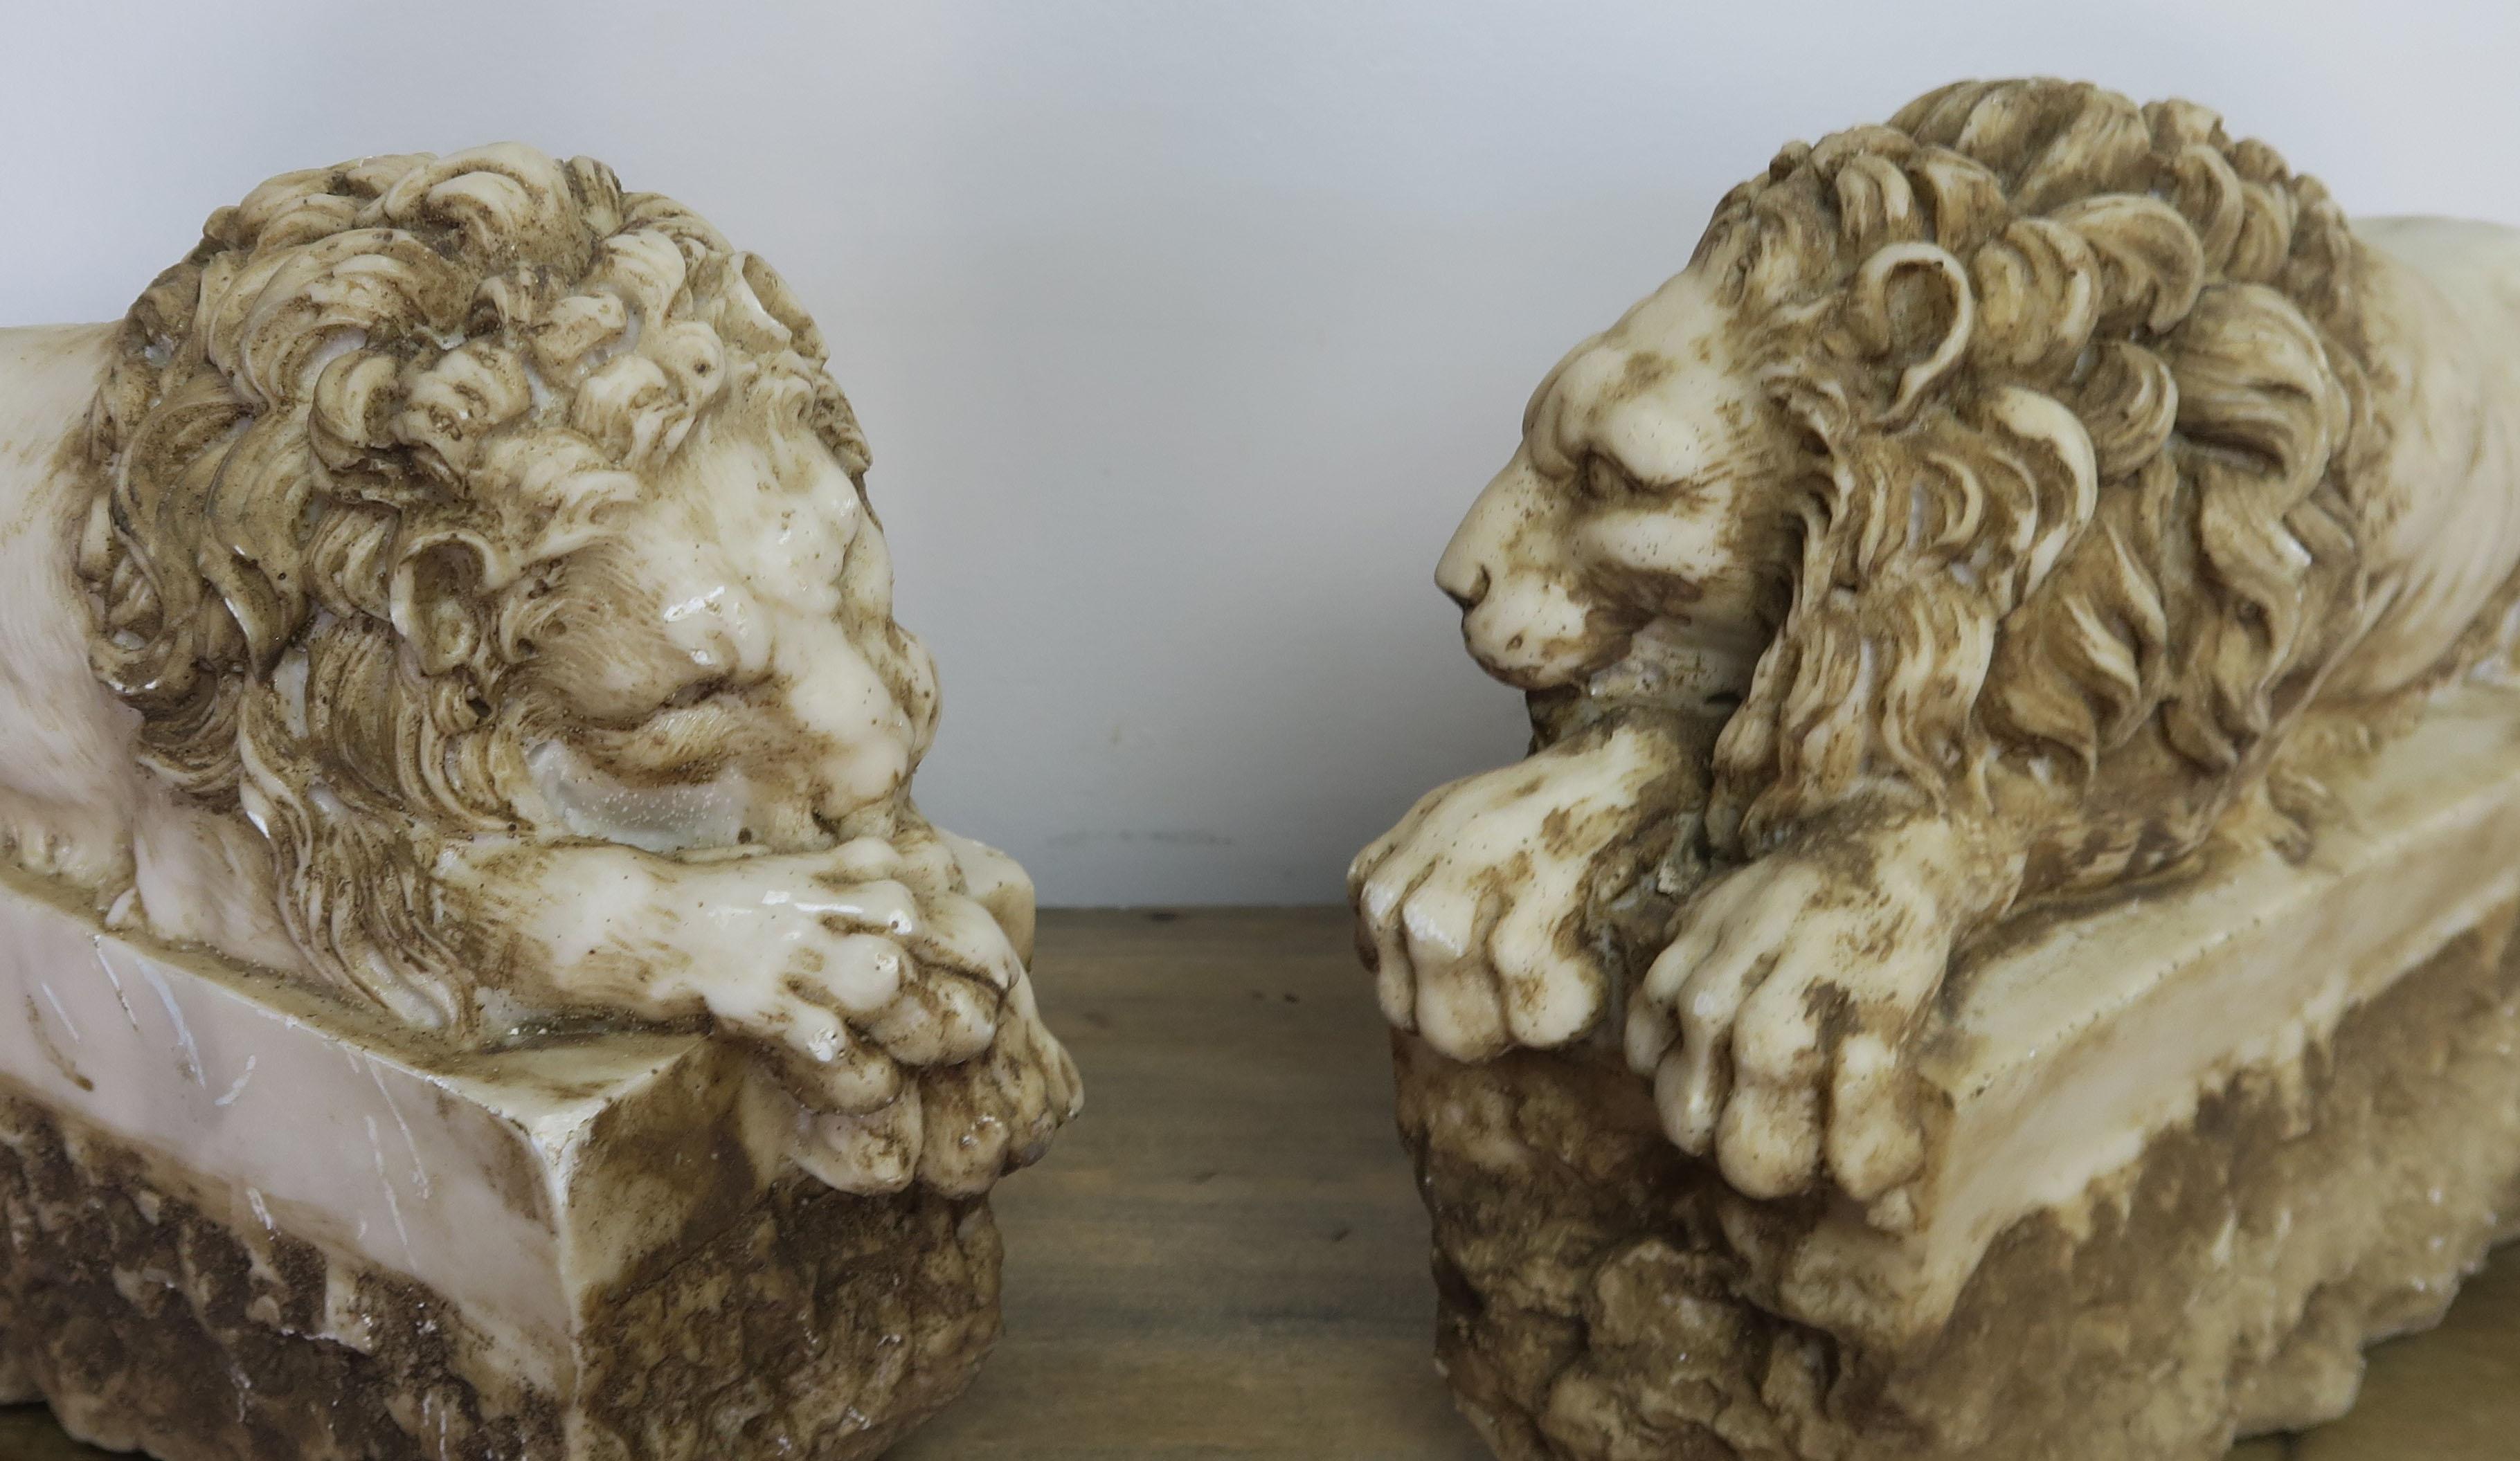 Limestone Pair of Carved Stone Replica Lions originally by Antonio Canova